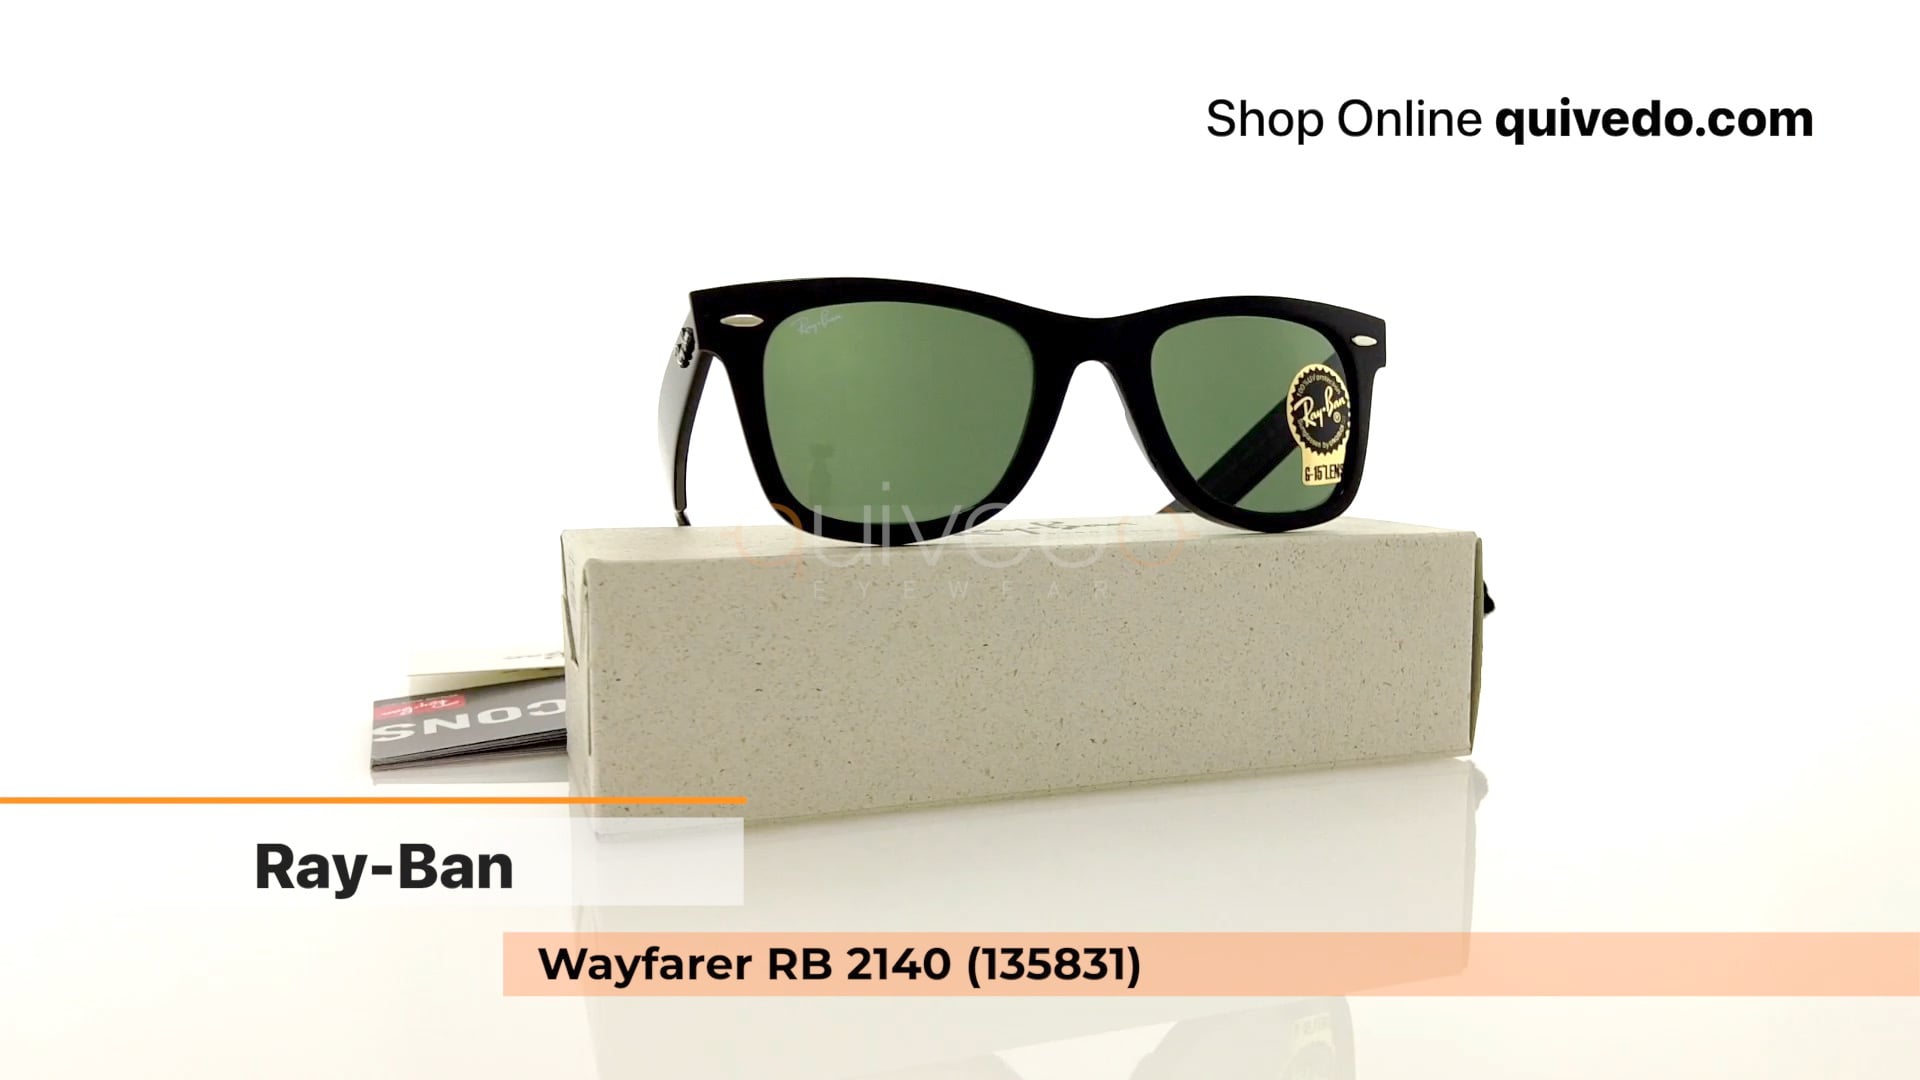 Ray-Ban Wayfarer RB 2140 (135831)